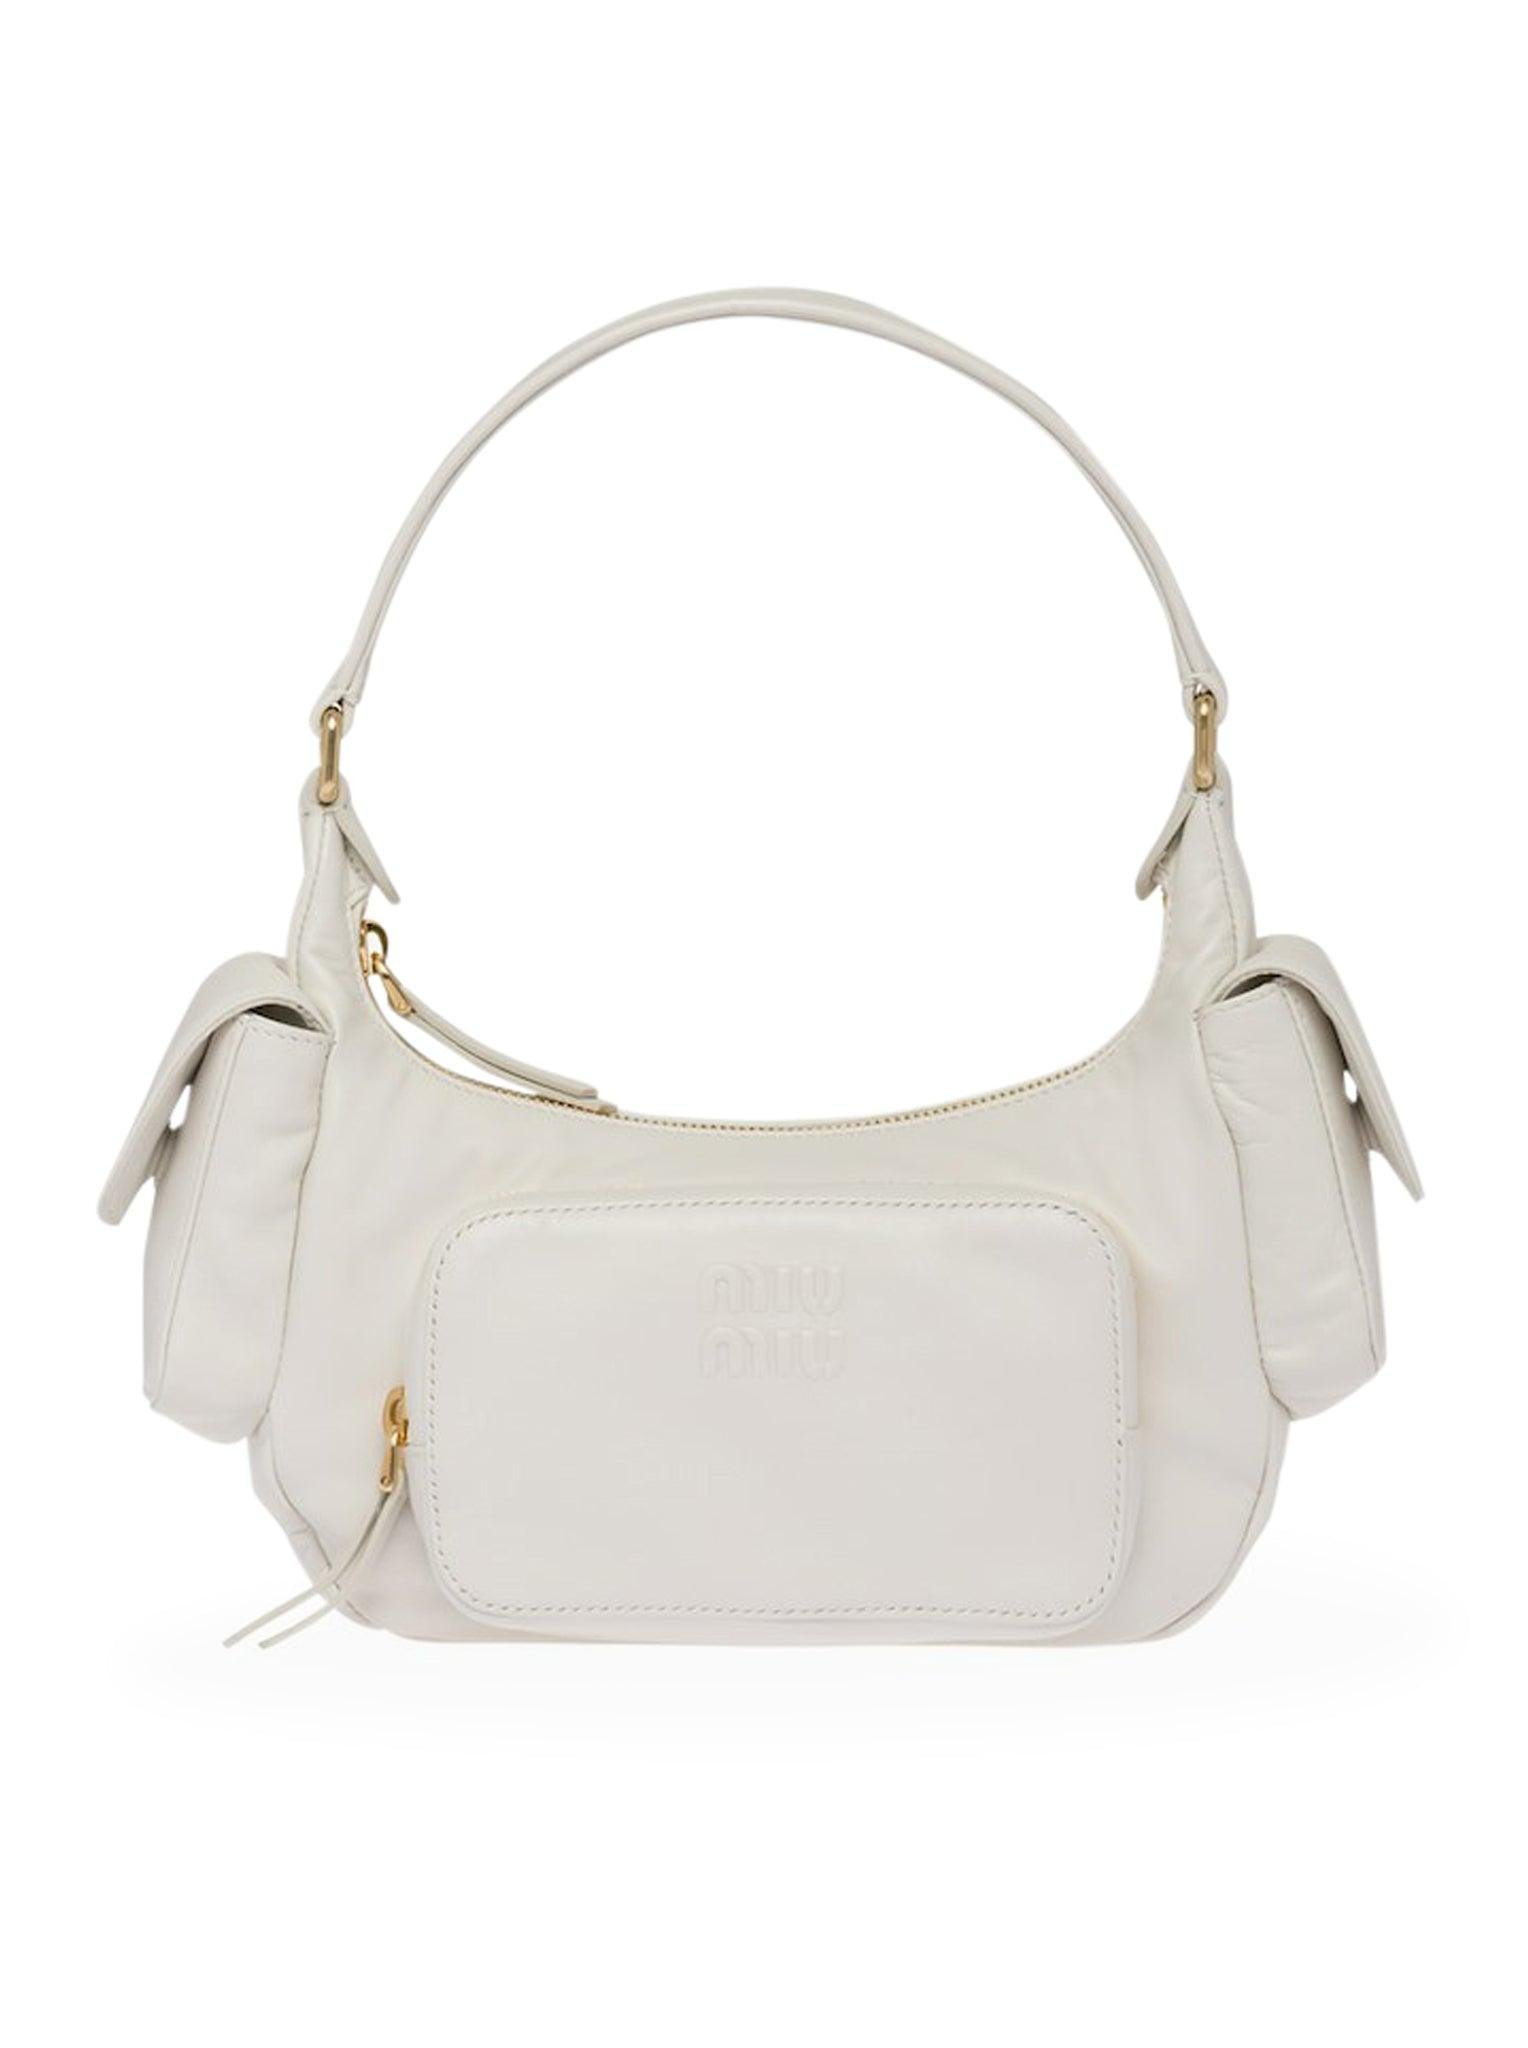 Miu Miu Pocket Bag In Nappa Leather in White